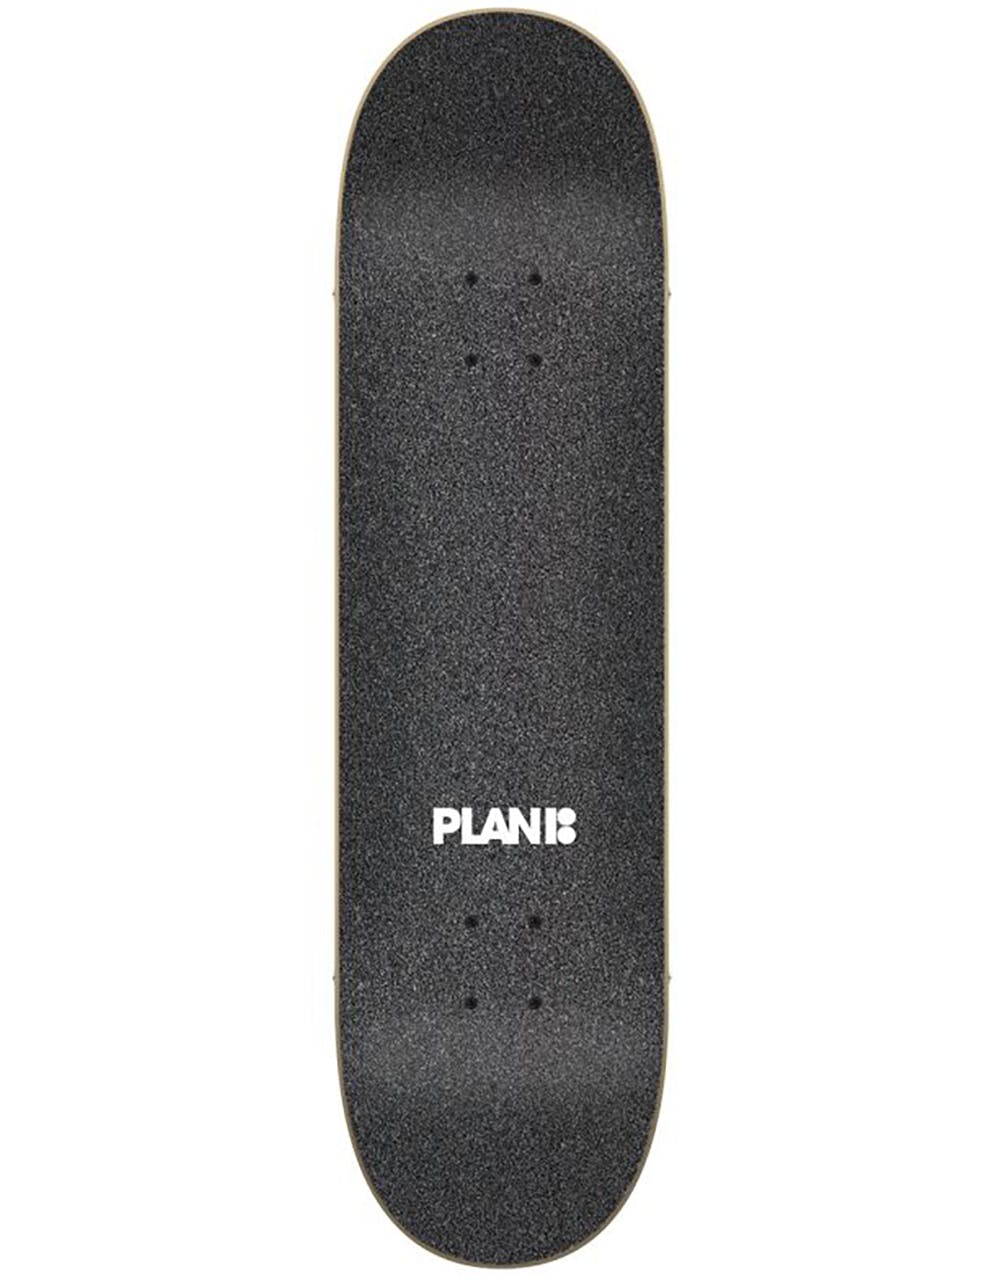 Plan B Team Spiral Complete Skateboard - 7.75"